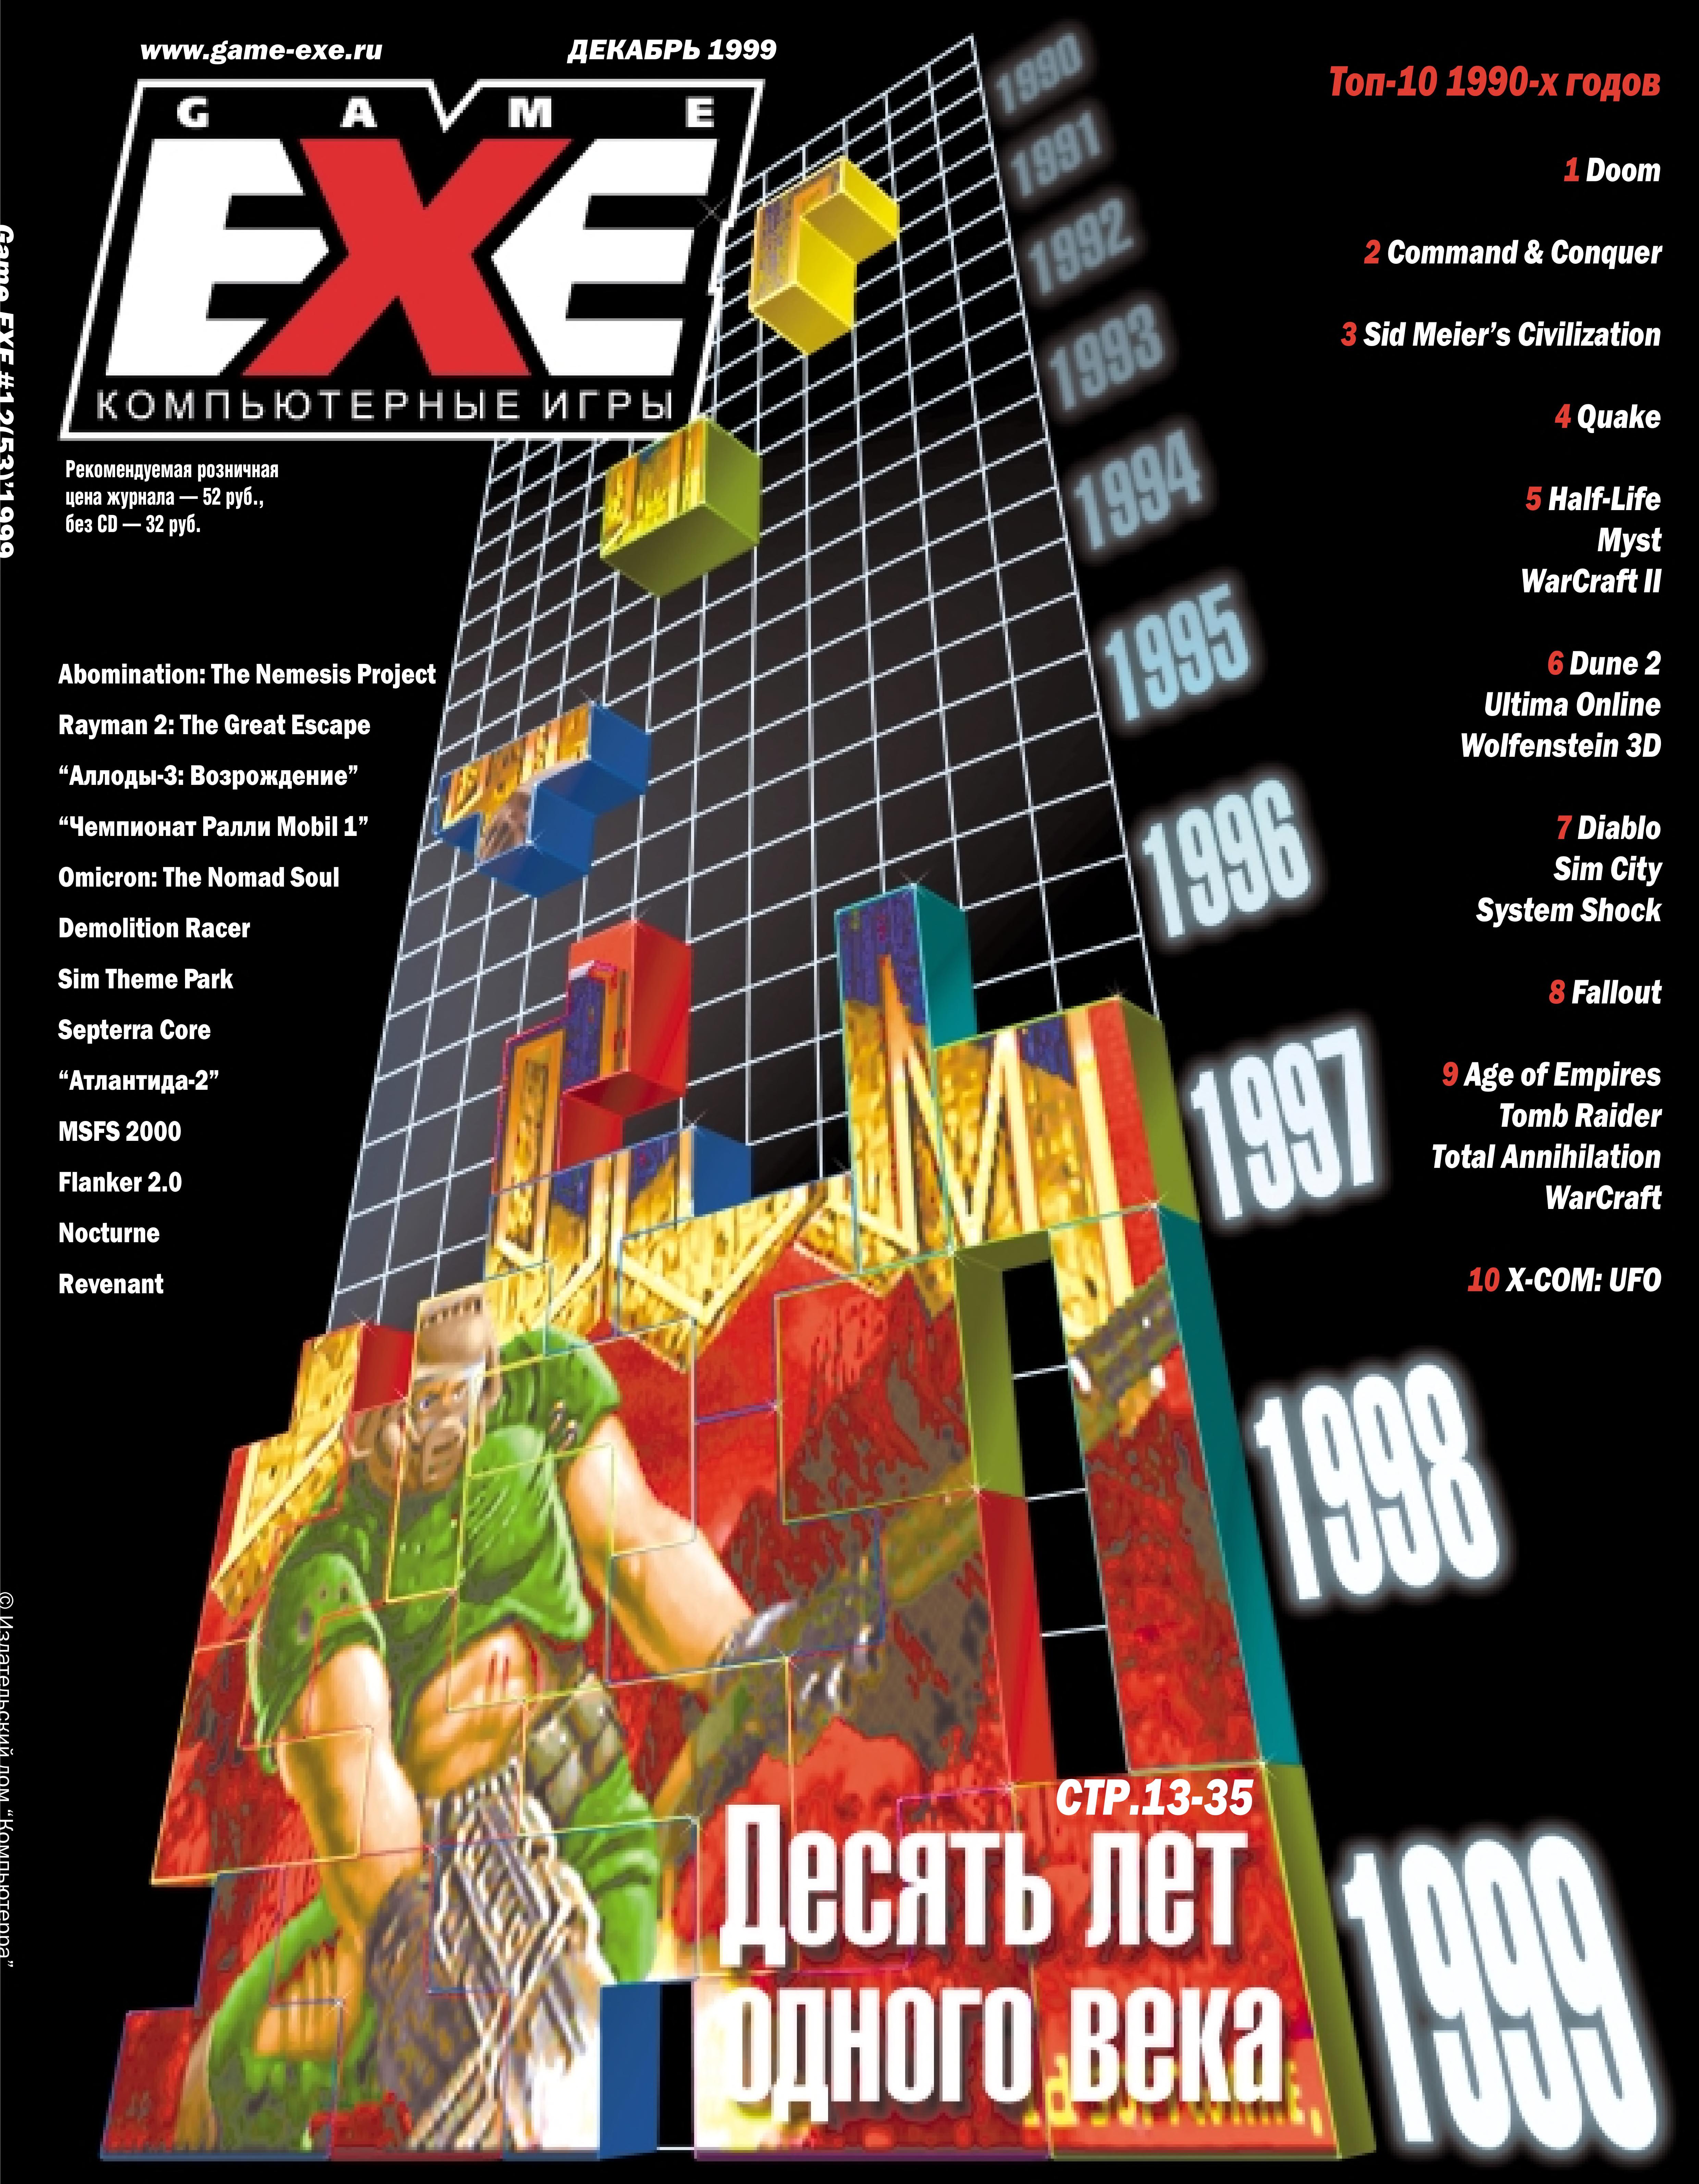 Download game exe. Журнал гейм ехе. Game exe журнал. Game exe 1999. Game exe 2000.